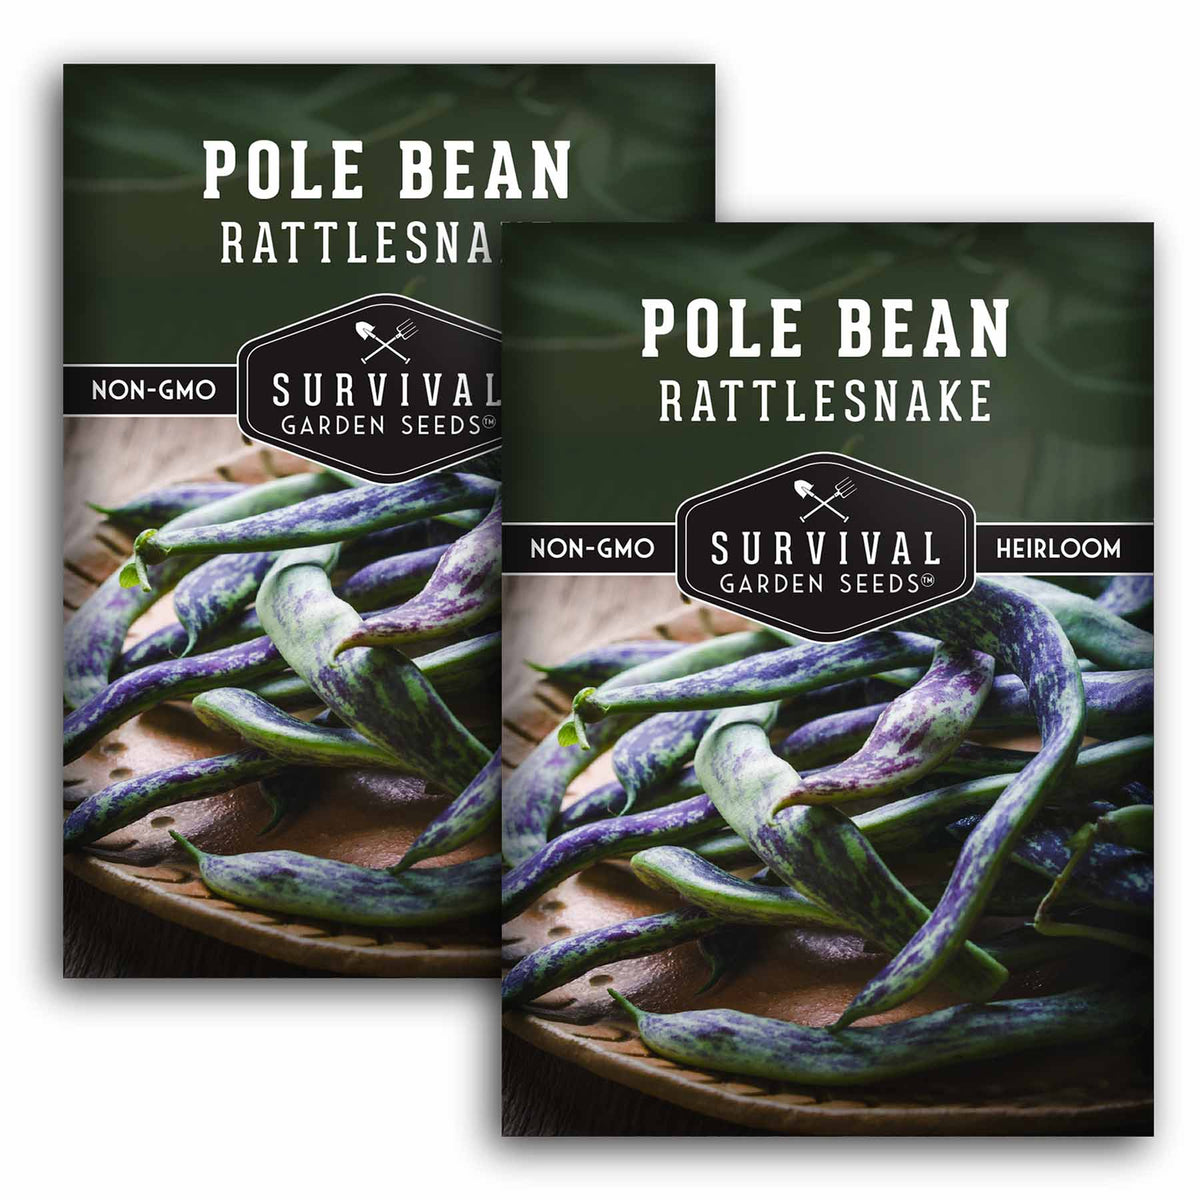 2 packets of Rattlesnake Pole Bean seeds